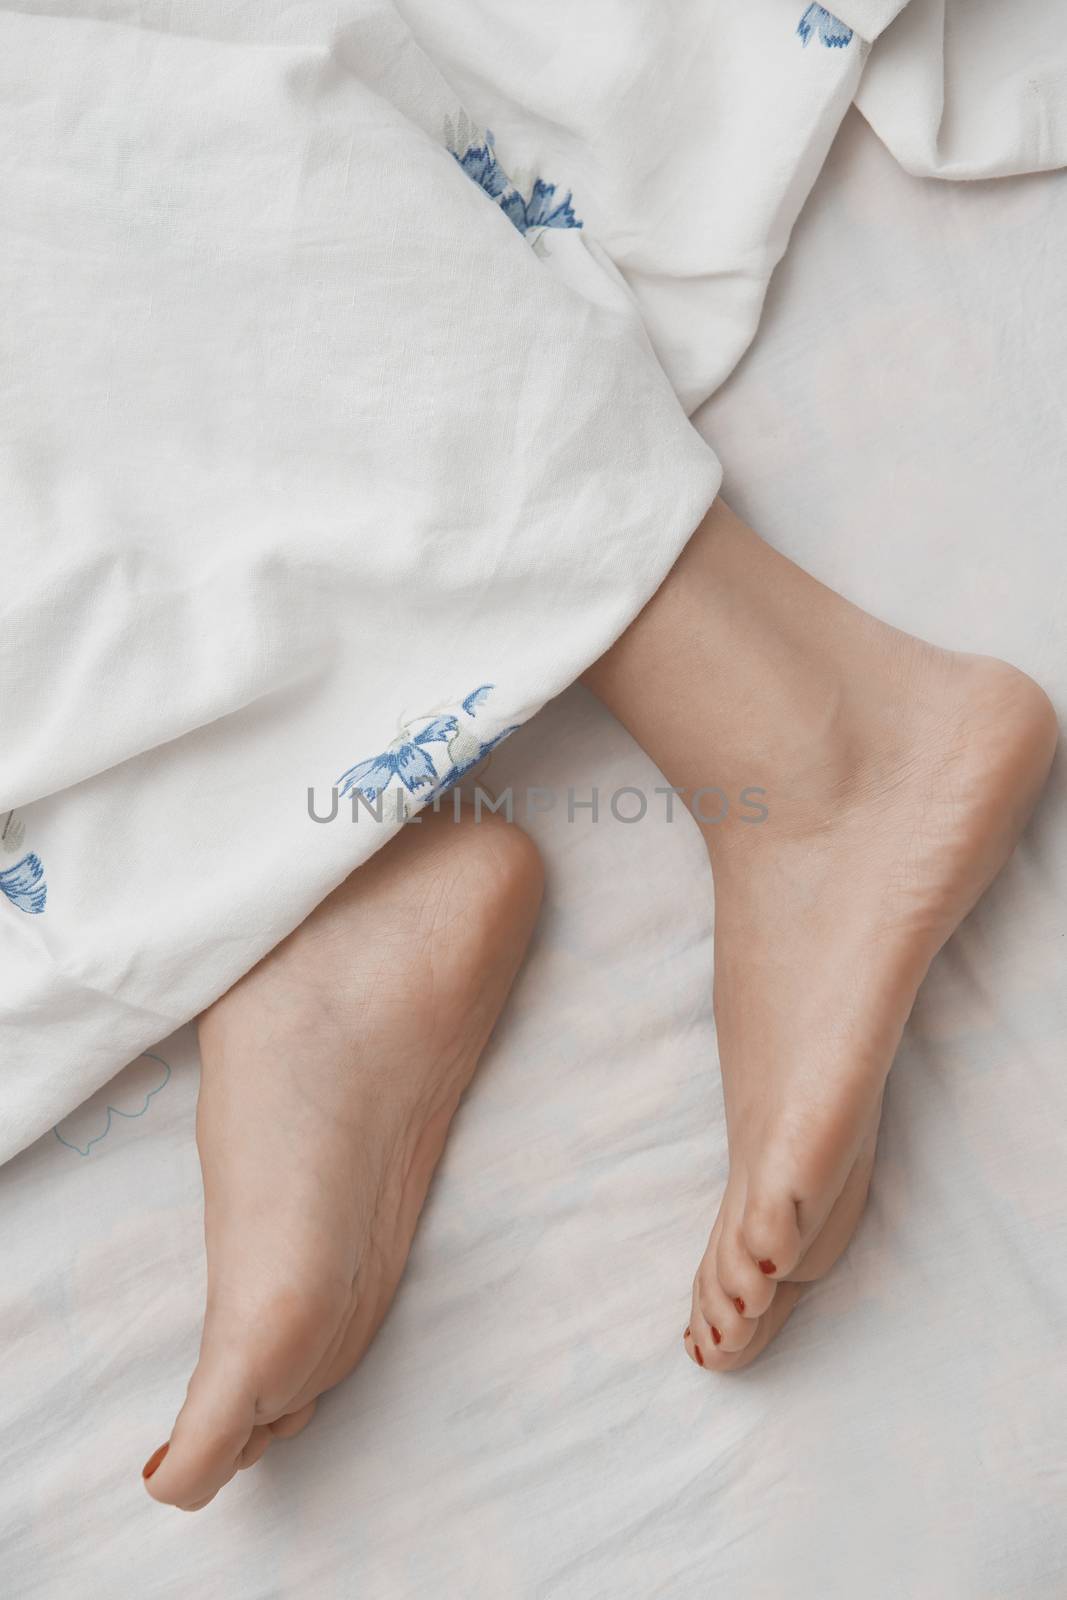 Feet of sleeping woman by Novic